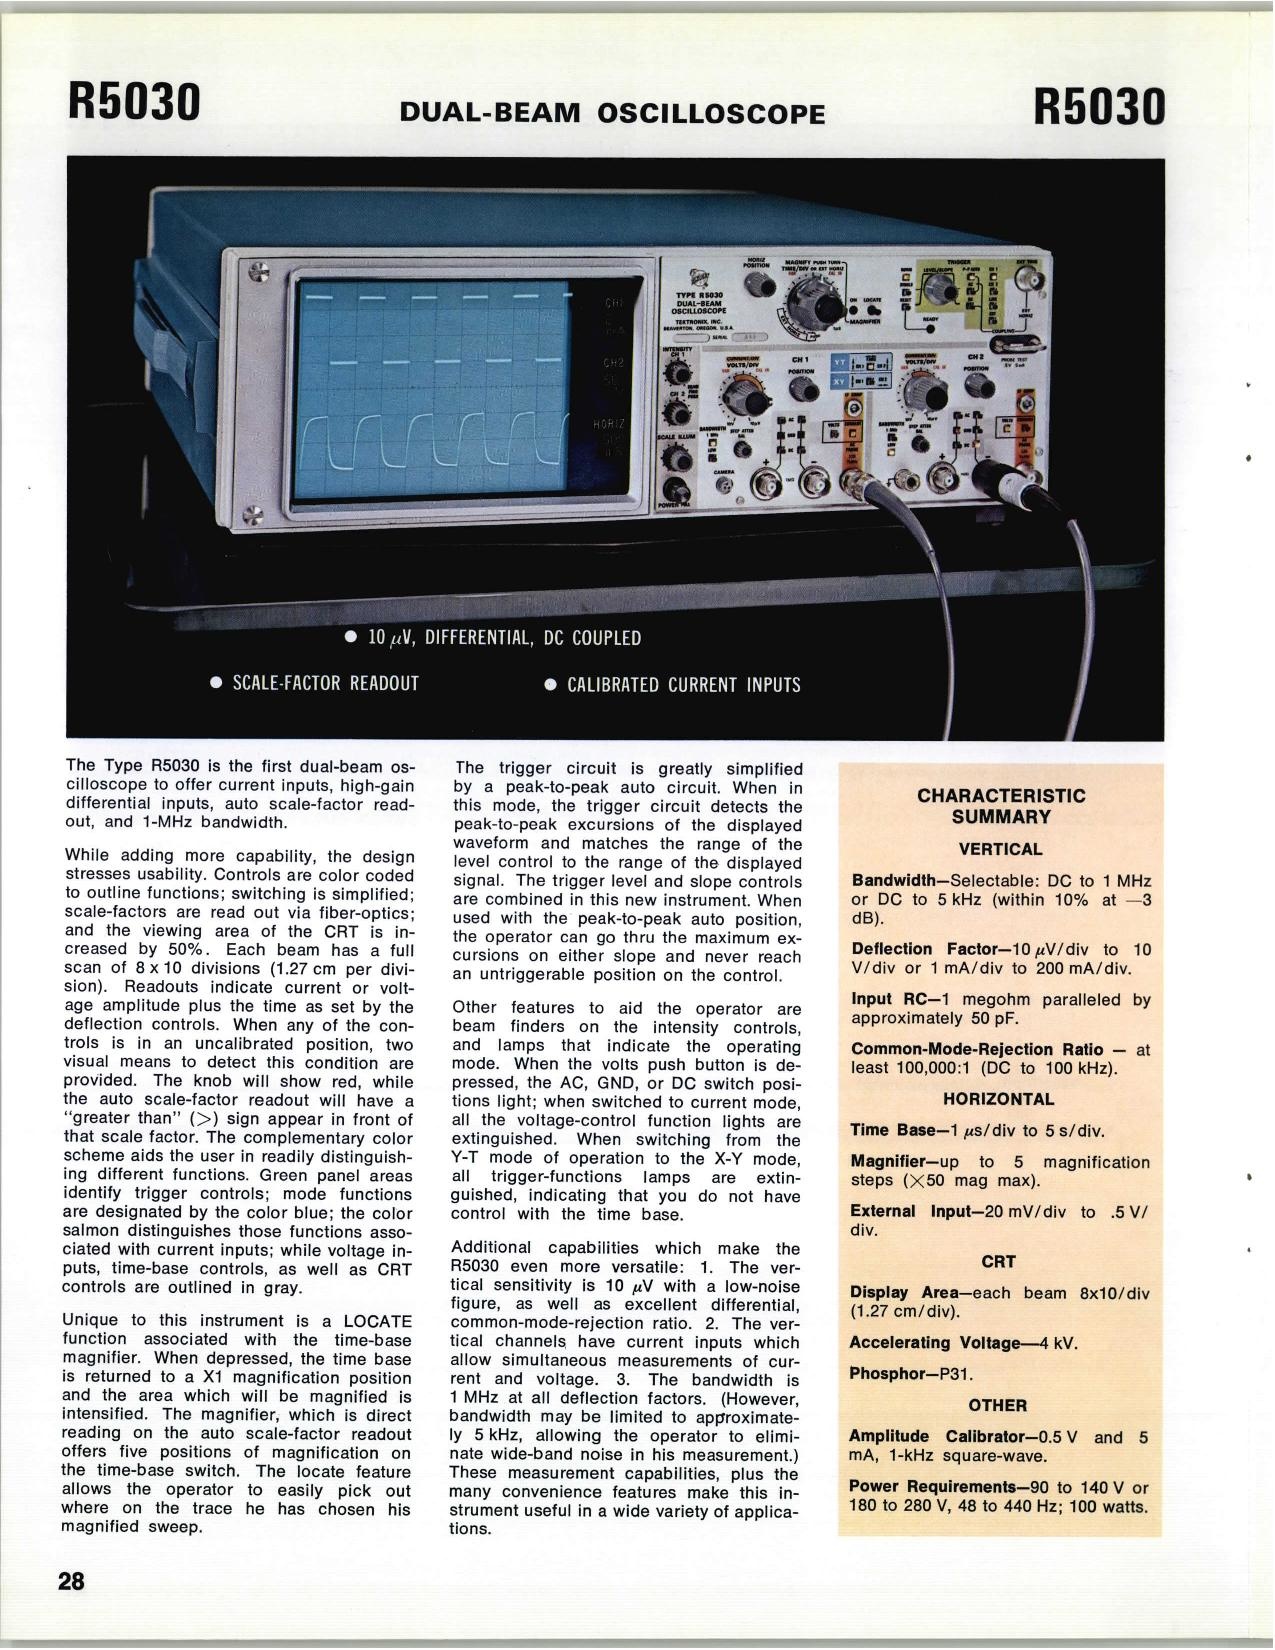 Tektronix R5030 in 1969 Catalog (internal link, PDF)